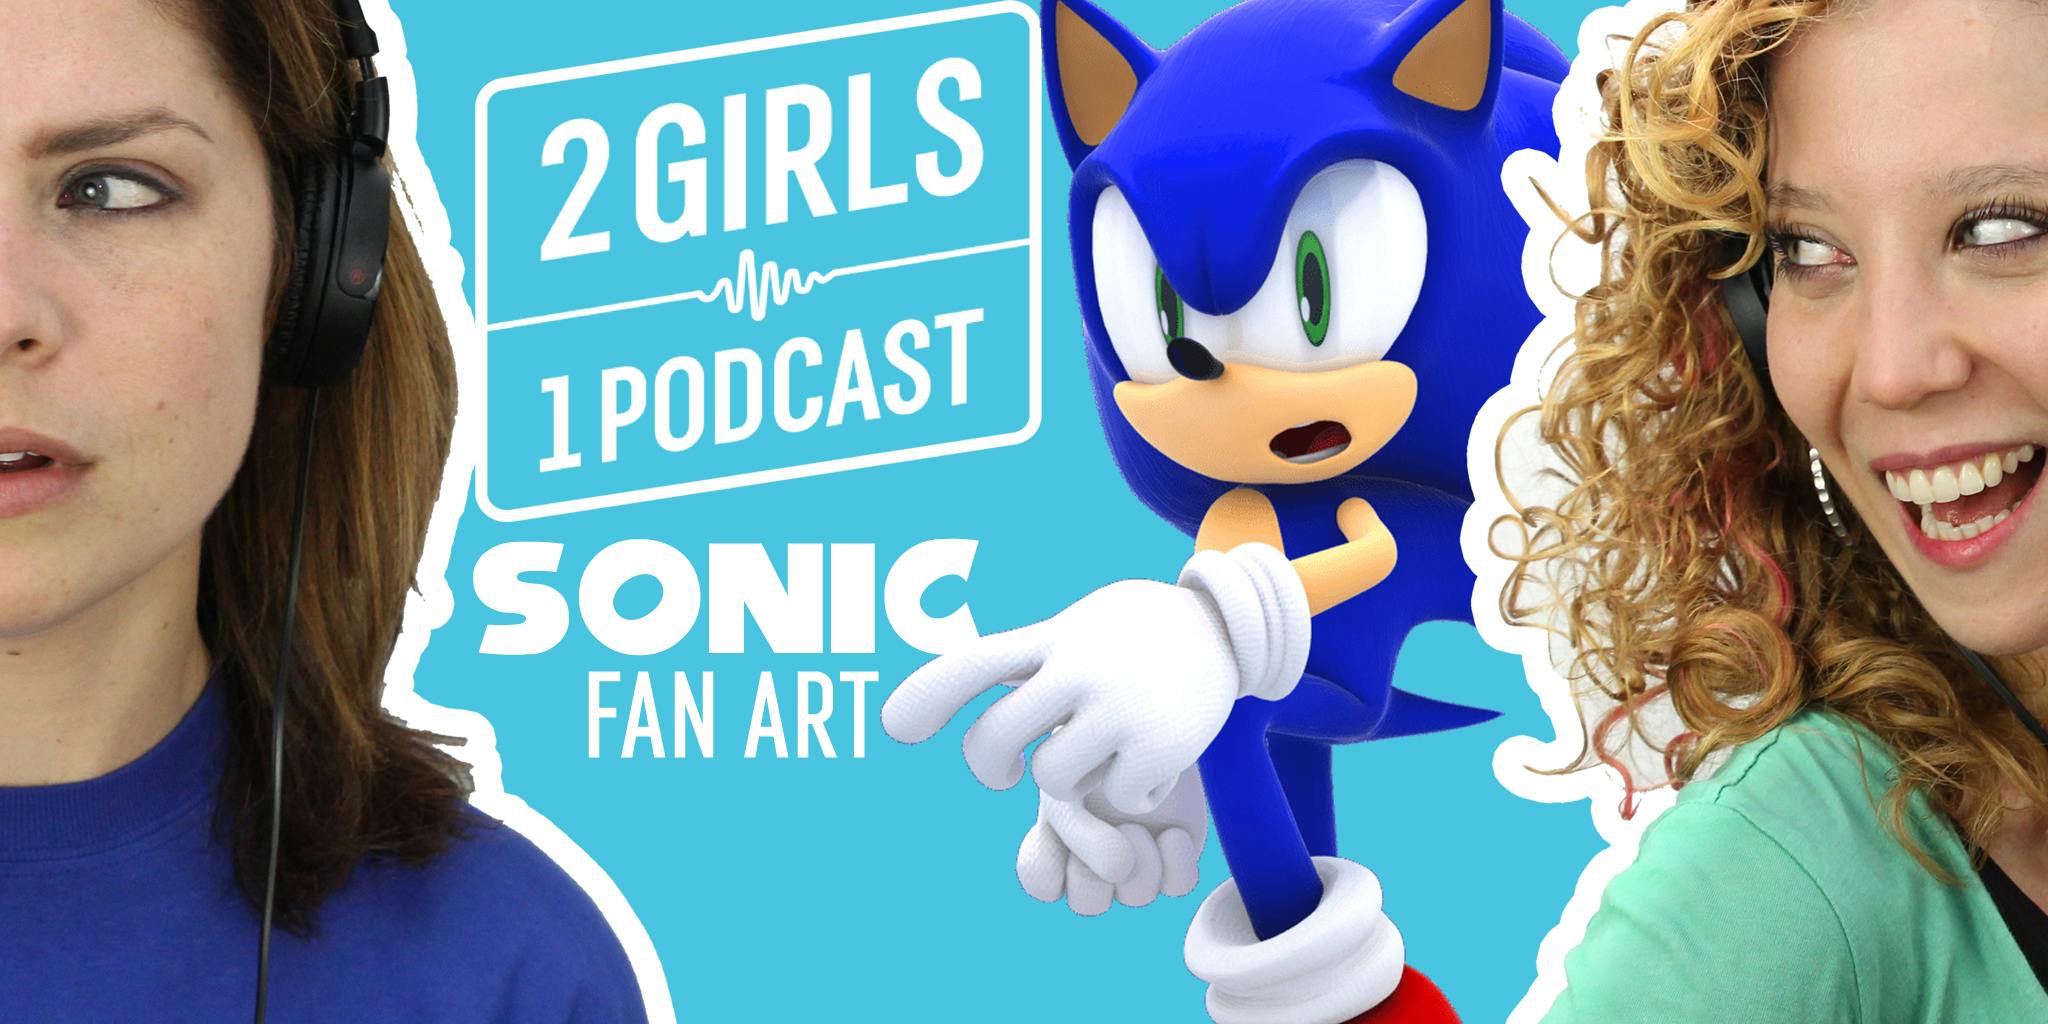 2 Girls 1 Podcast SONIC